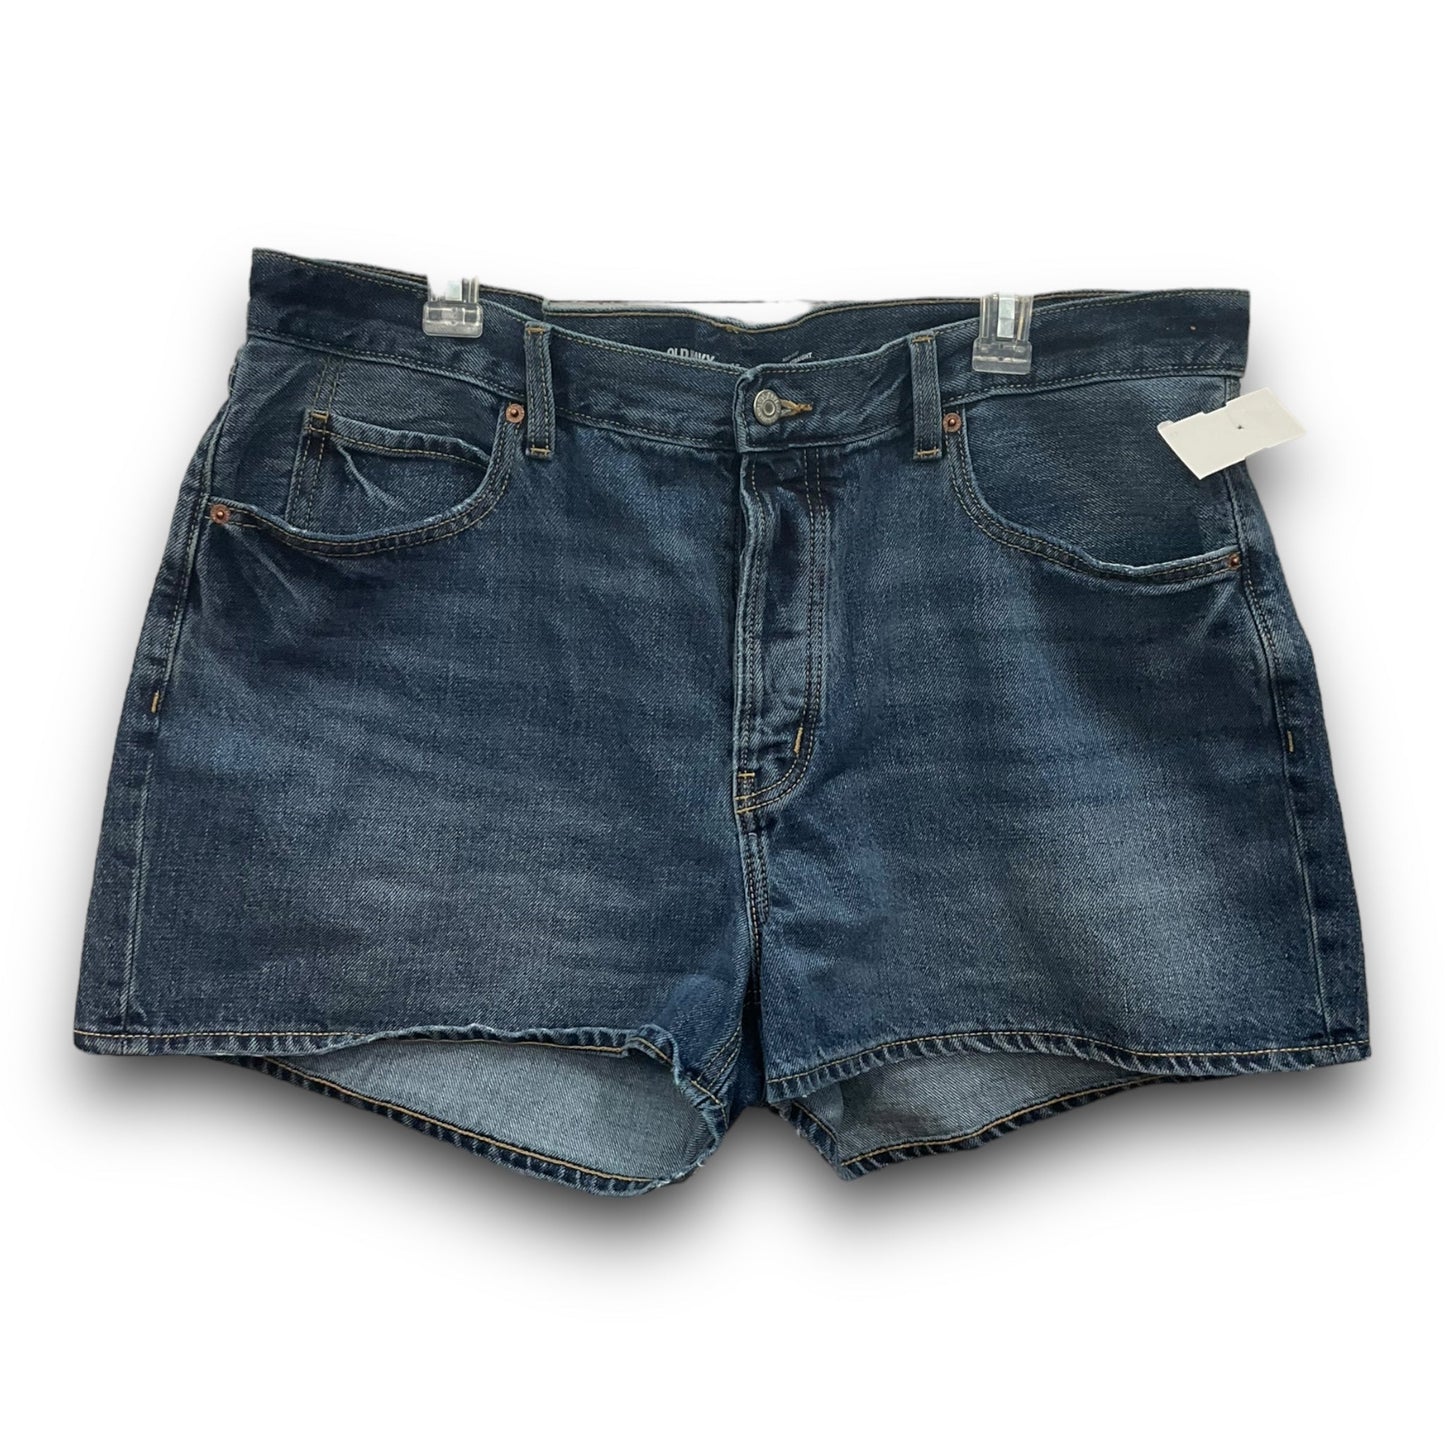 Blue Denim Shorts Old Navy, Size 16